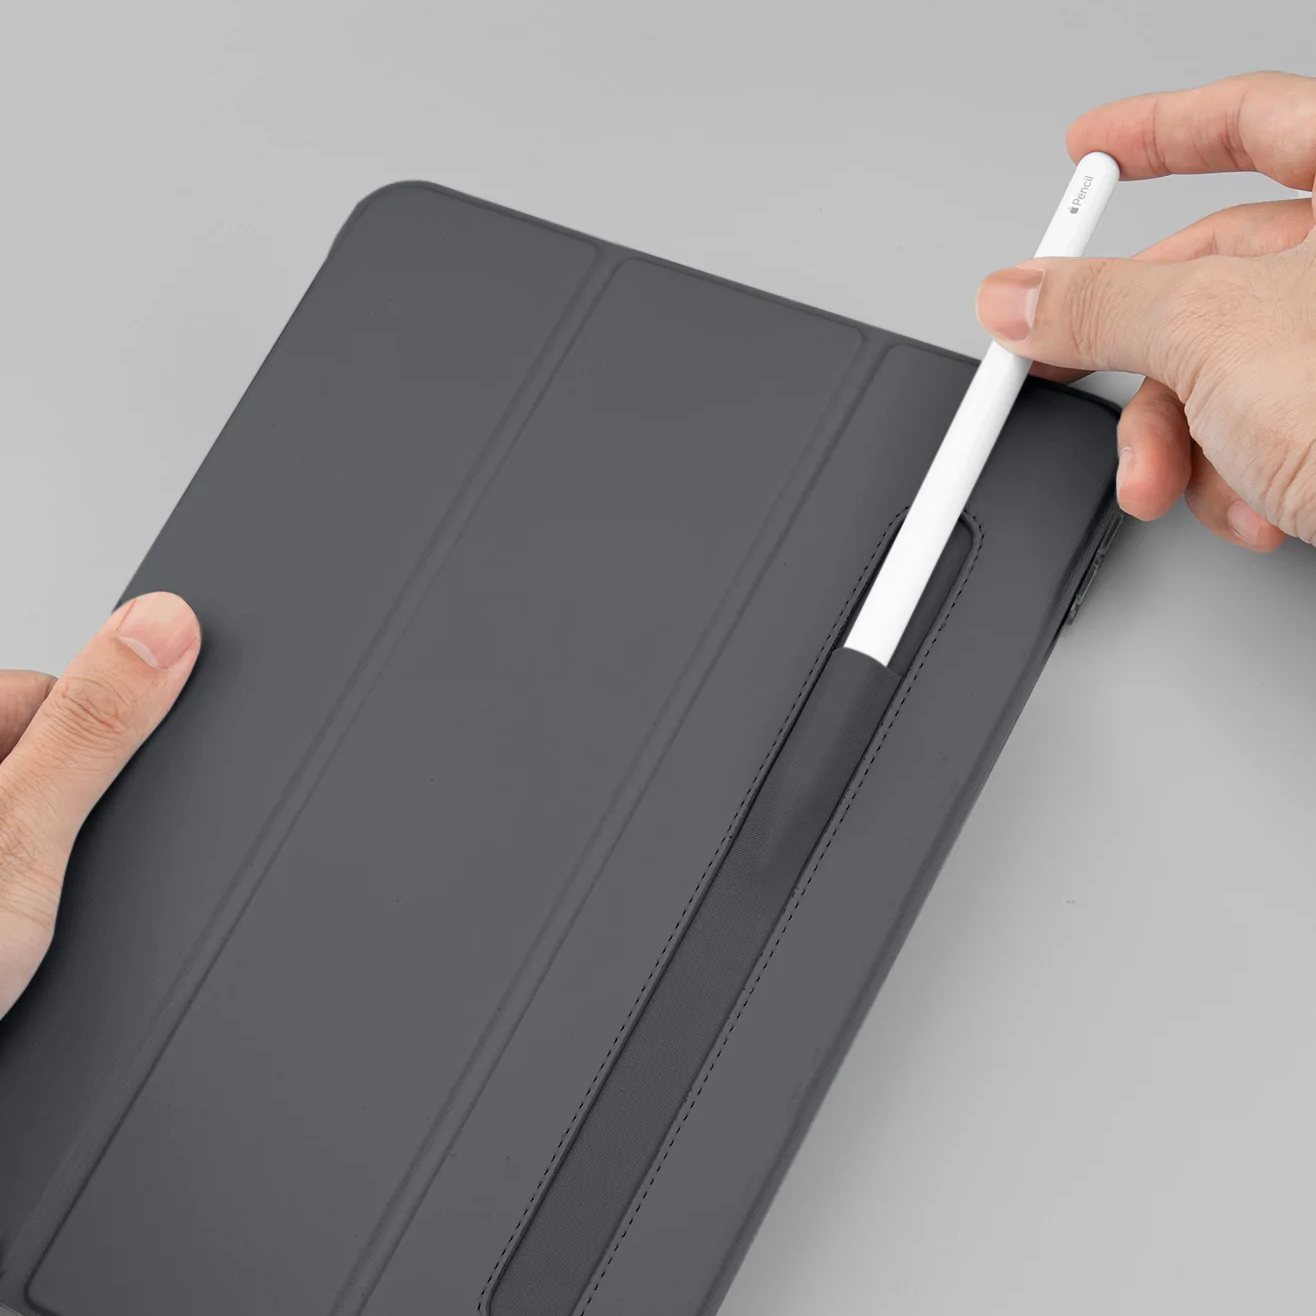 LAUT HUEX Folio 透亮 2018 iPad Pro 12.9吋 3代 含筆槽平板保護套, 灰